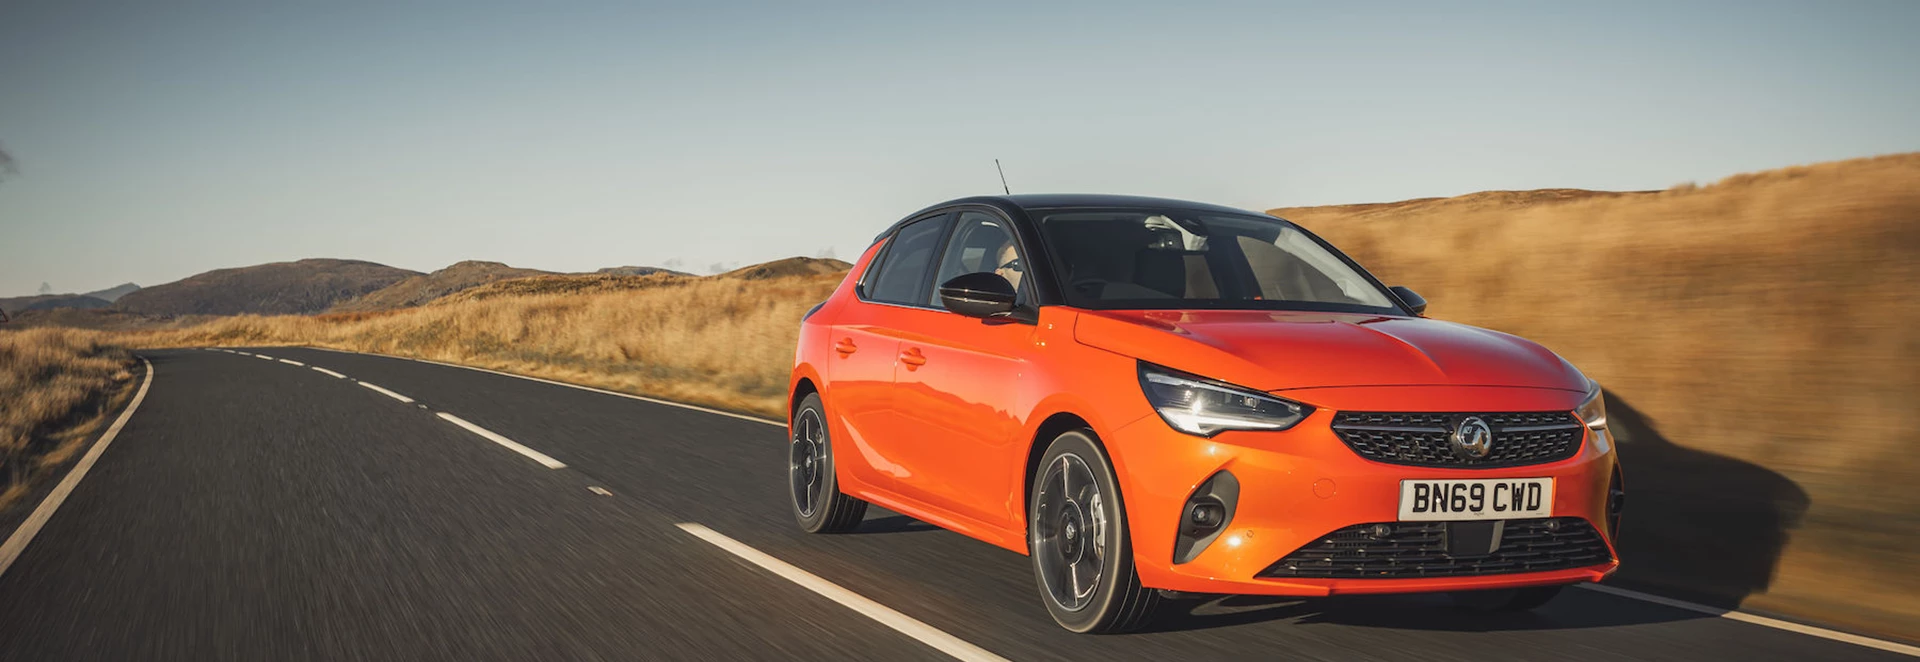 Vauxhall range: What’s on offer? 